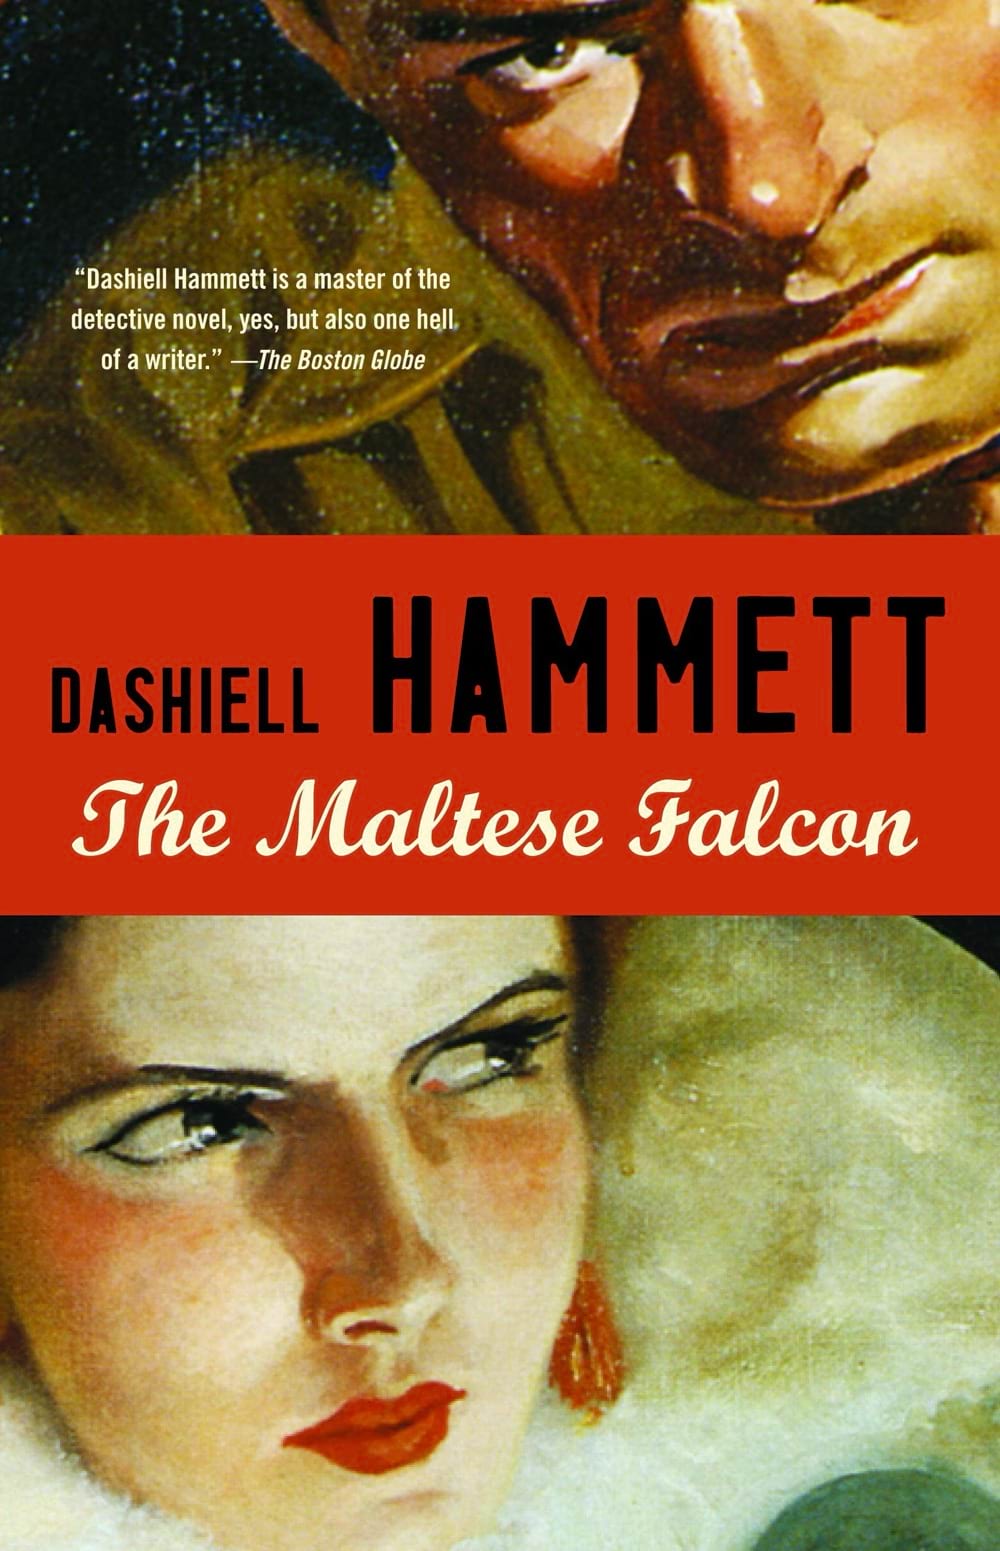 The cover of The Maltese Falcon